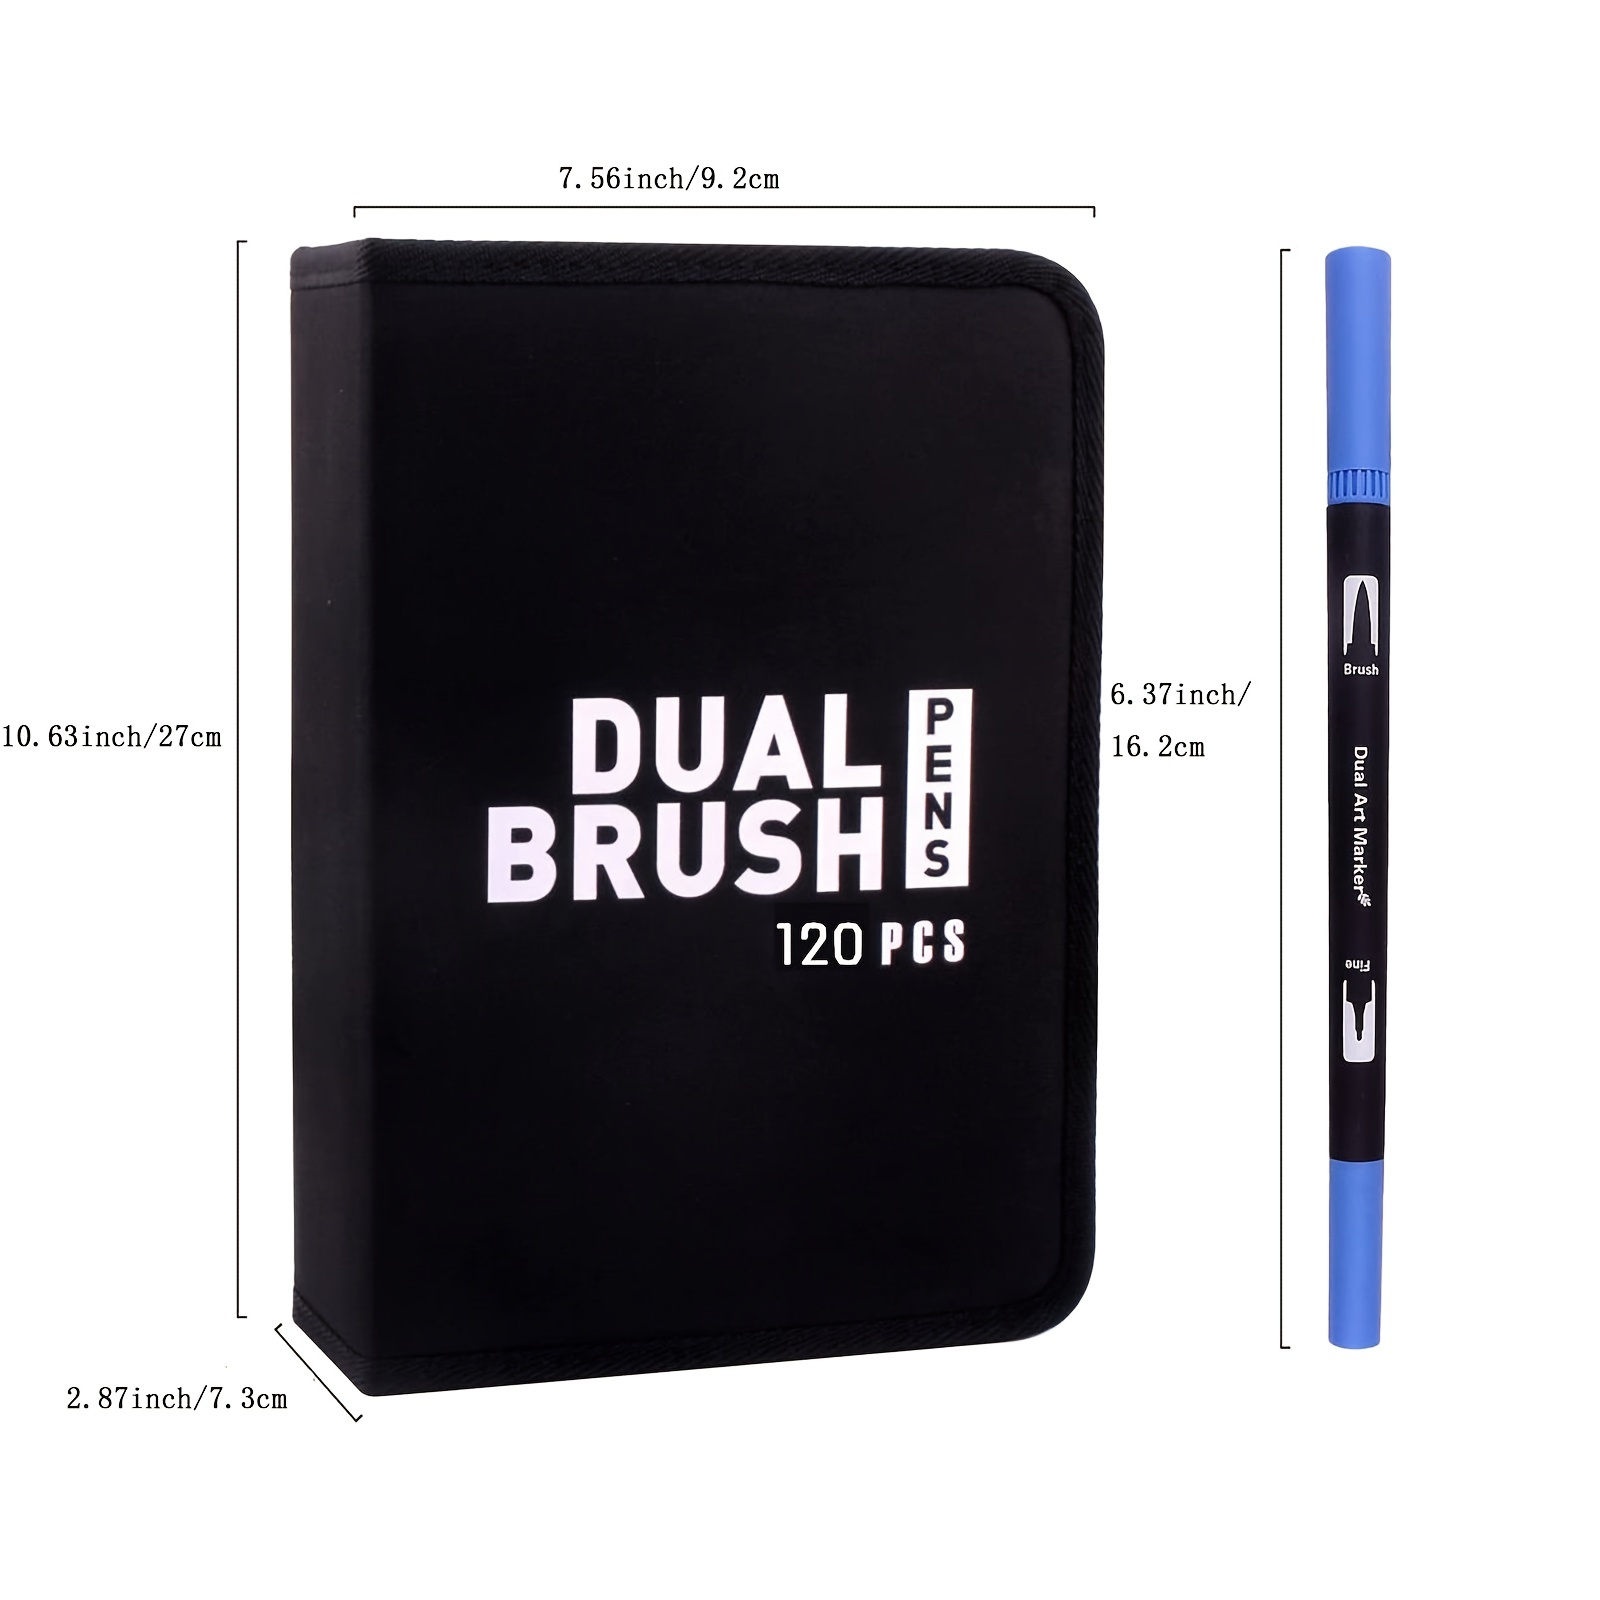 100 Colours Dual Tip Brush Pen Set, Fineliner Pens, Art Markers for Ad –  hhhouu